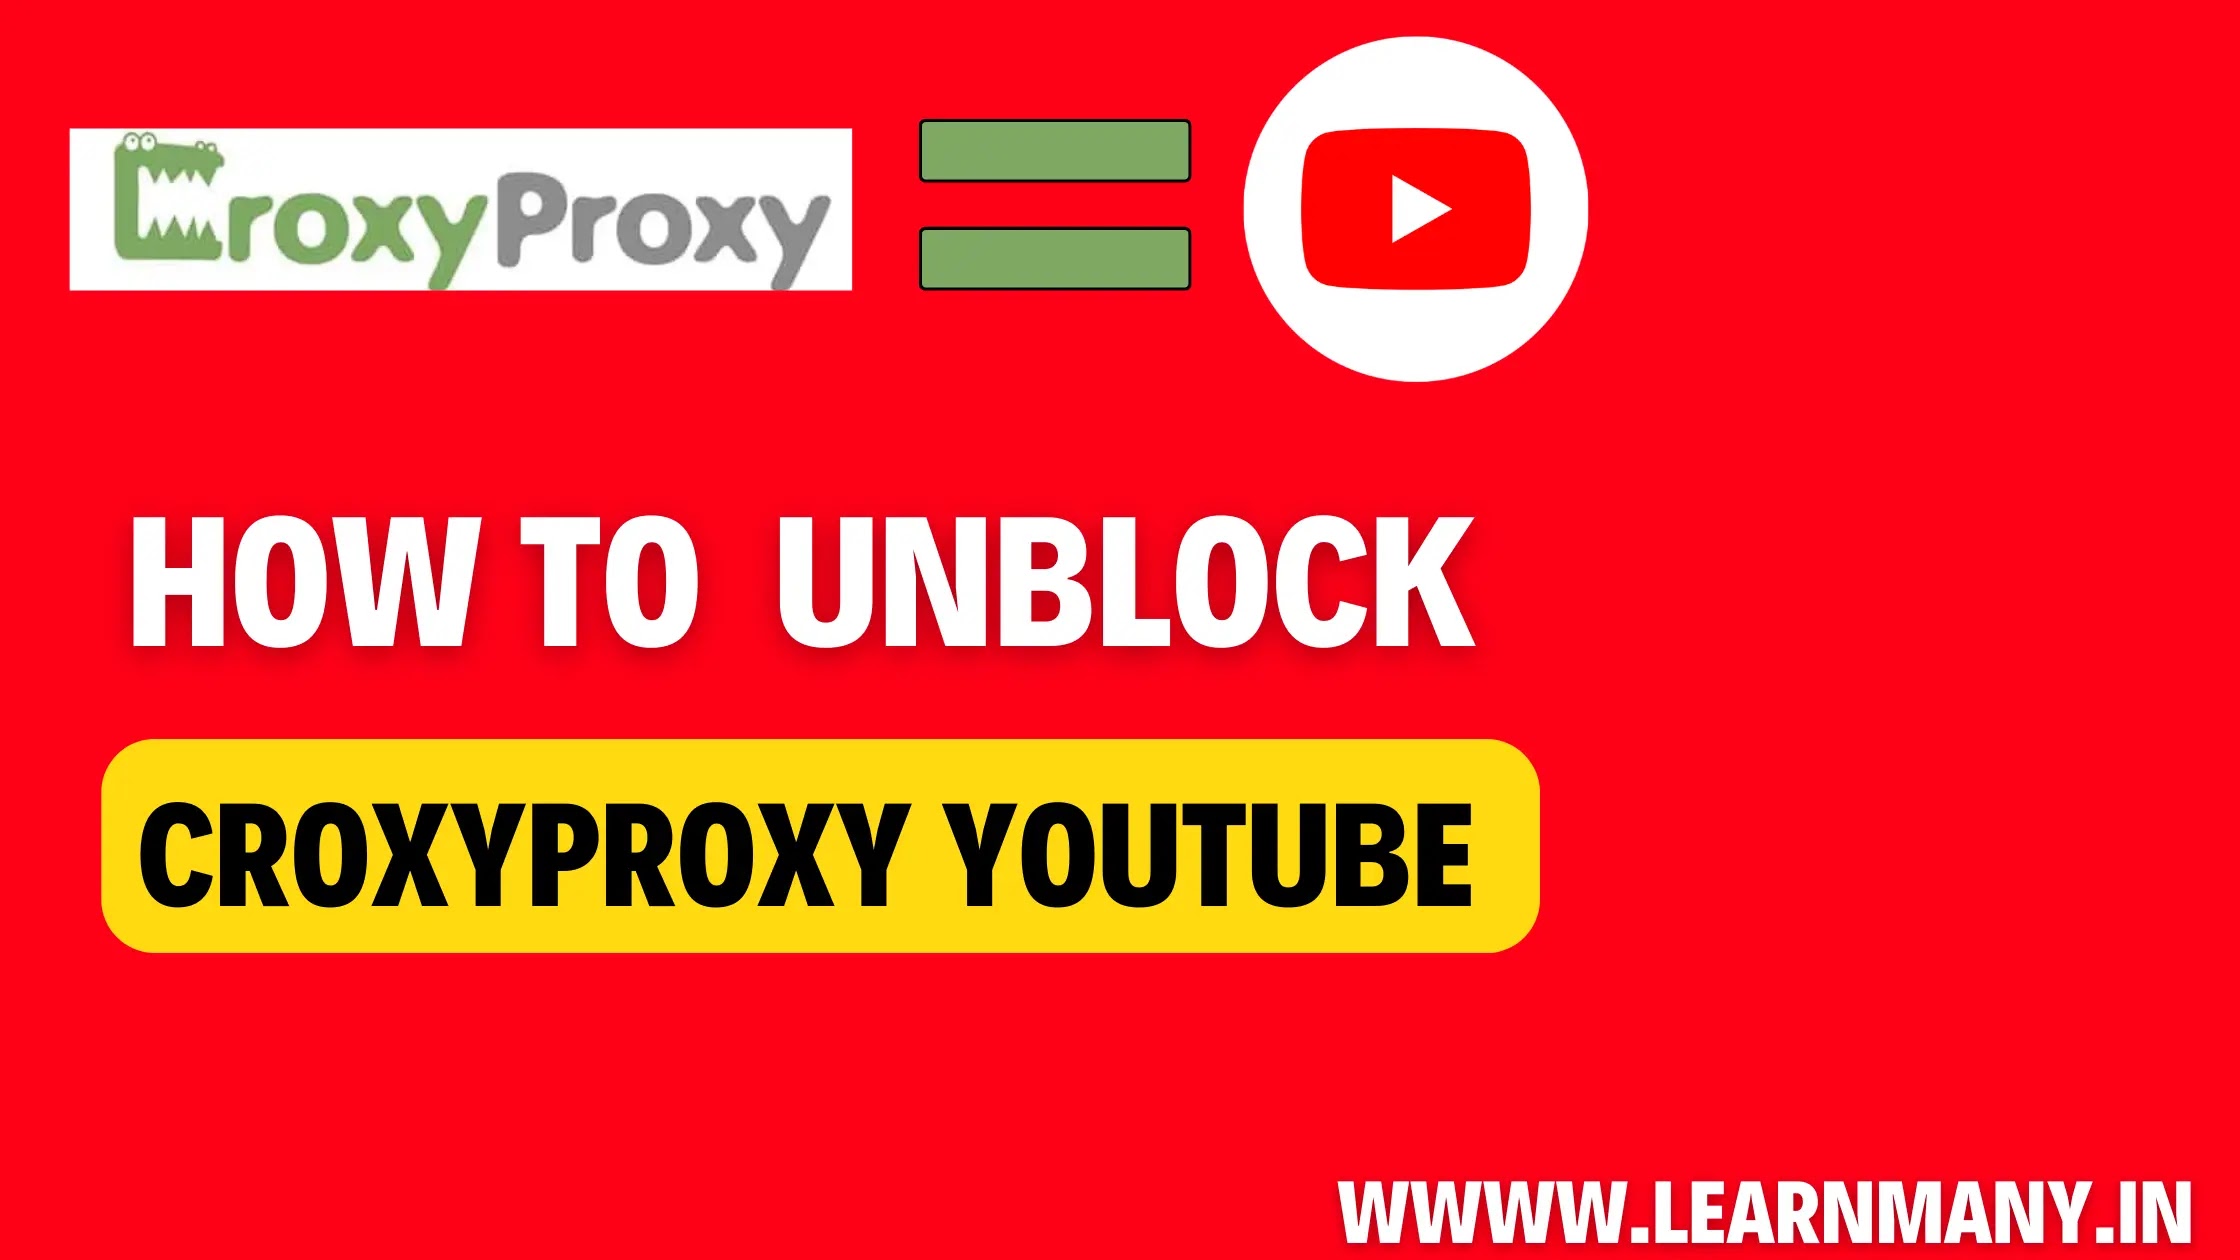 Croxyproxy Youtube unblocked